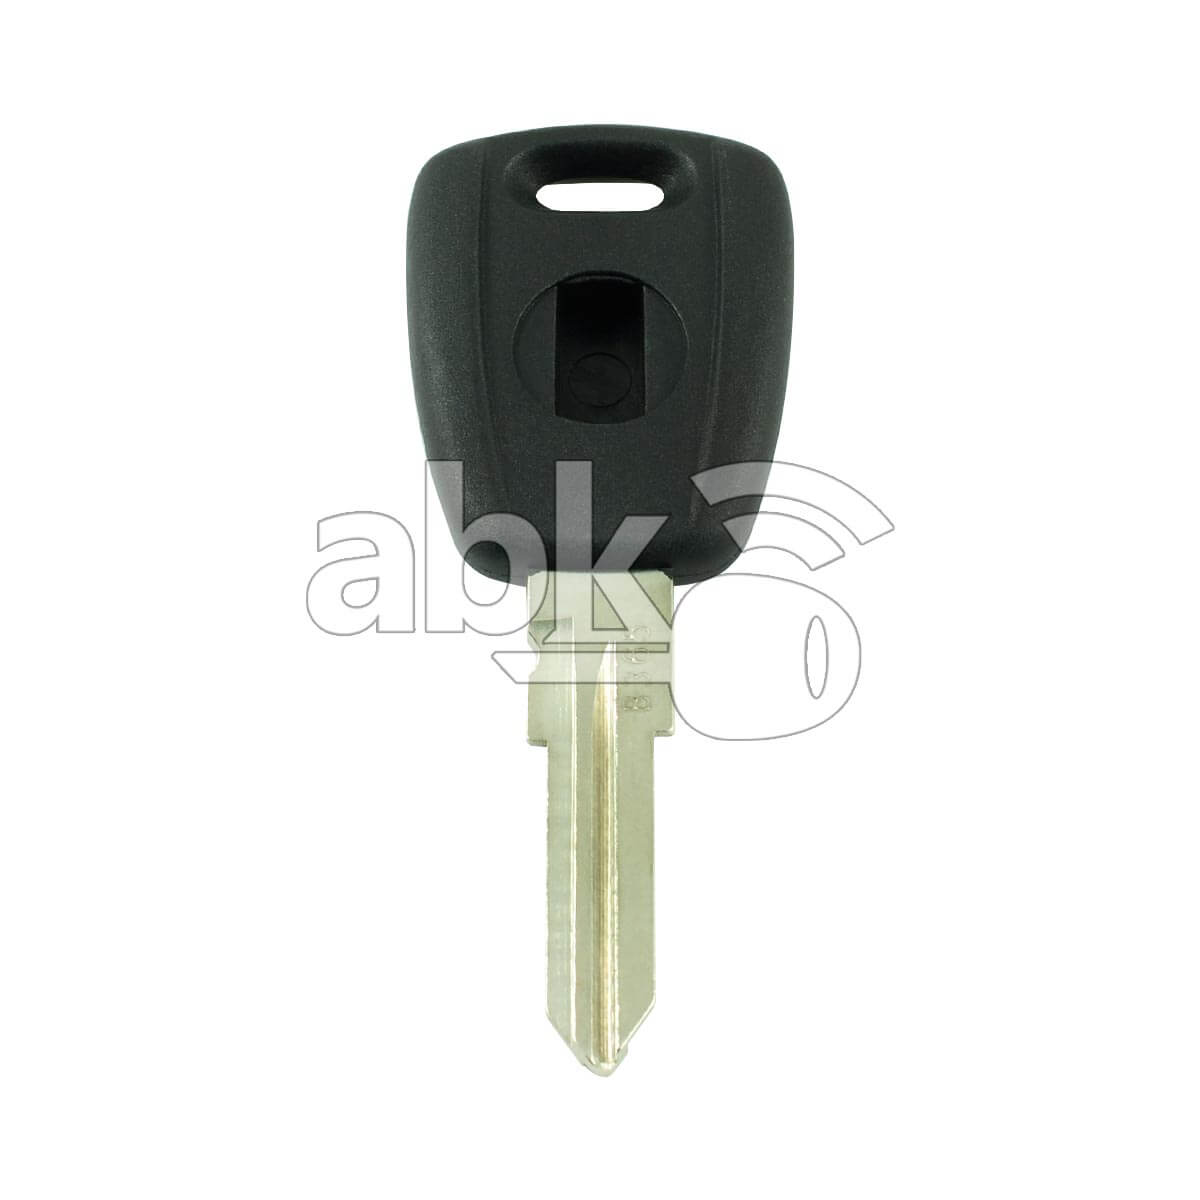 Fiat Chip Less Key GT15 - ABK-4130 - ABKEYS.COM